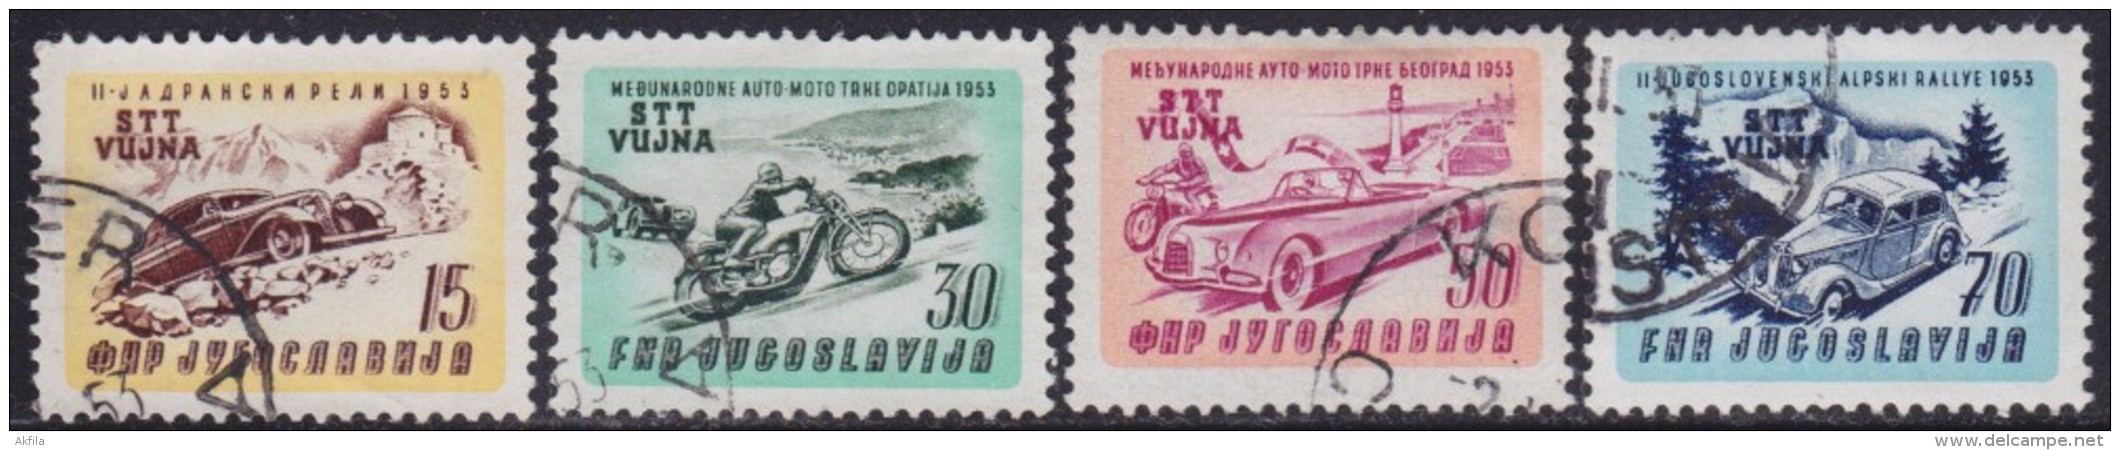 5051. Italy Yugoslavia Trieste Zone B 1953 Adriatic Car And Motorcycle Rally, Used (o) Michel 98-101 - Gebraucht